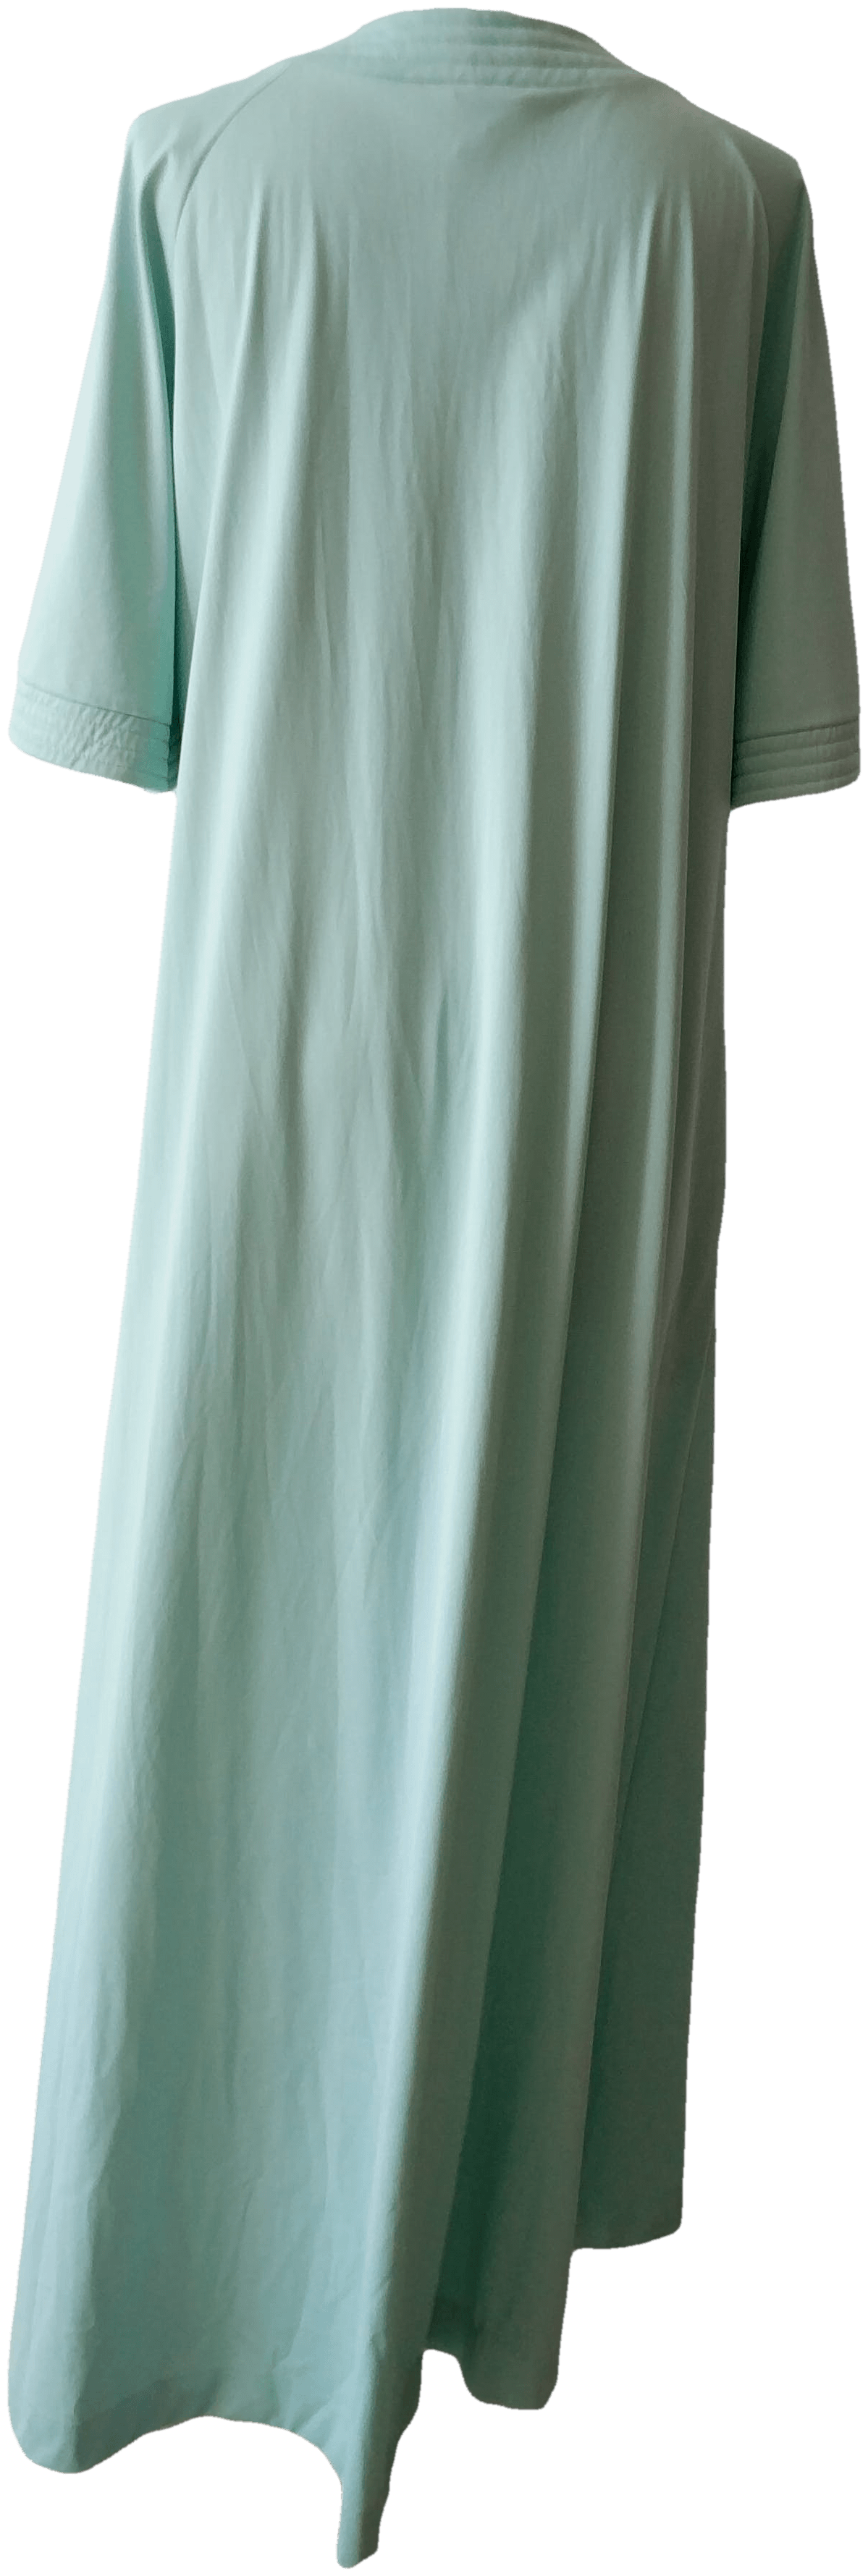 Vintage Sea Foam Green Full Length Shift Dress by Vanity Fair | Shop ...